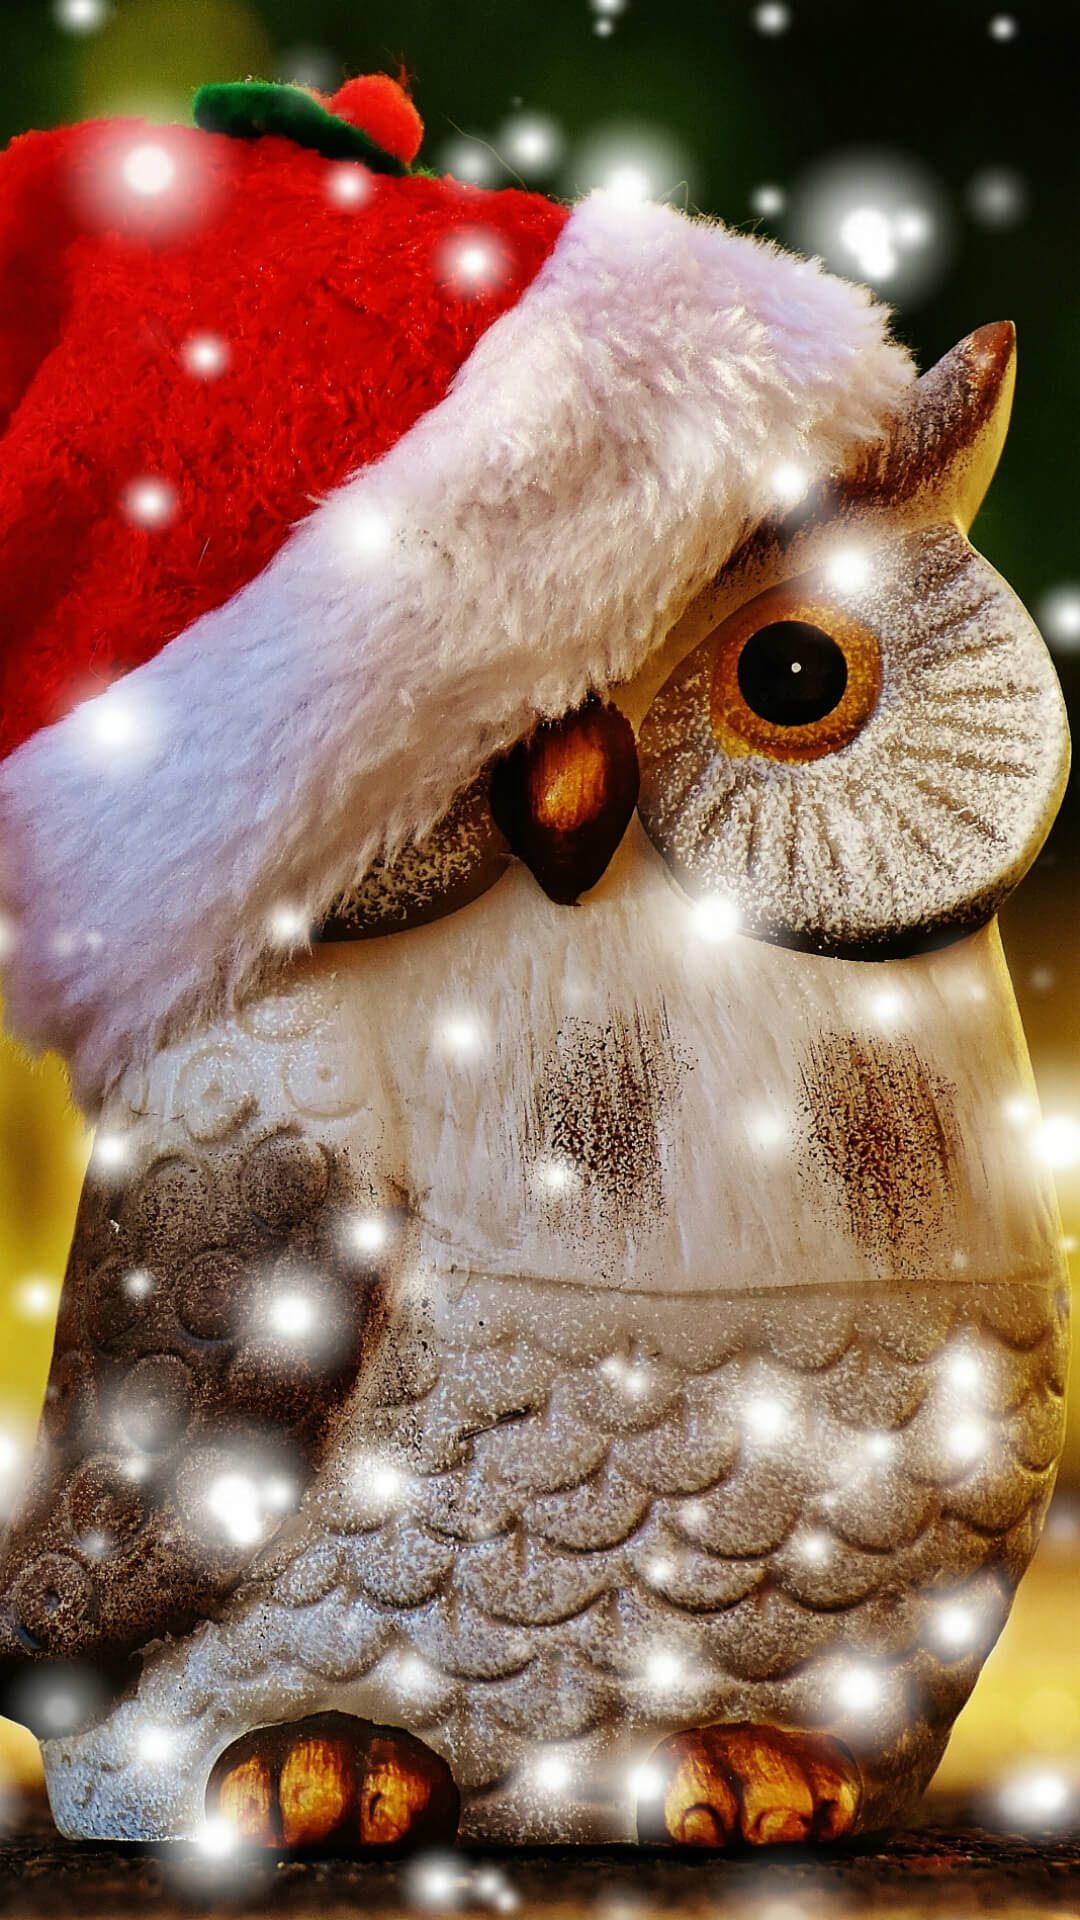 Merry Christmas Owl Wallpaper Free Merry Christmas Owl Background